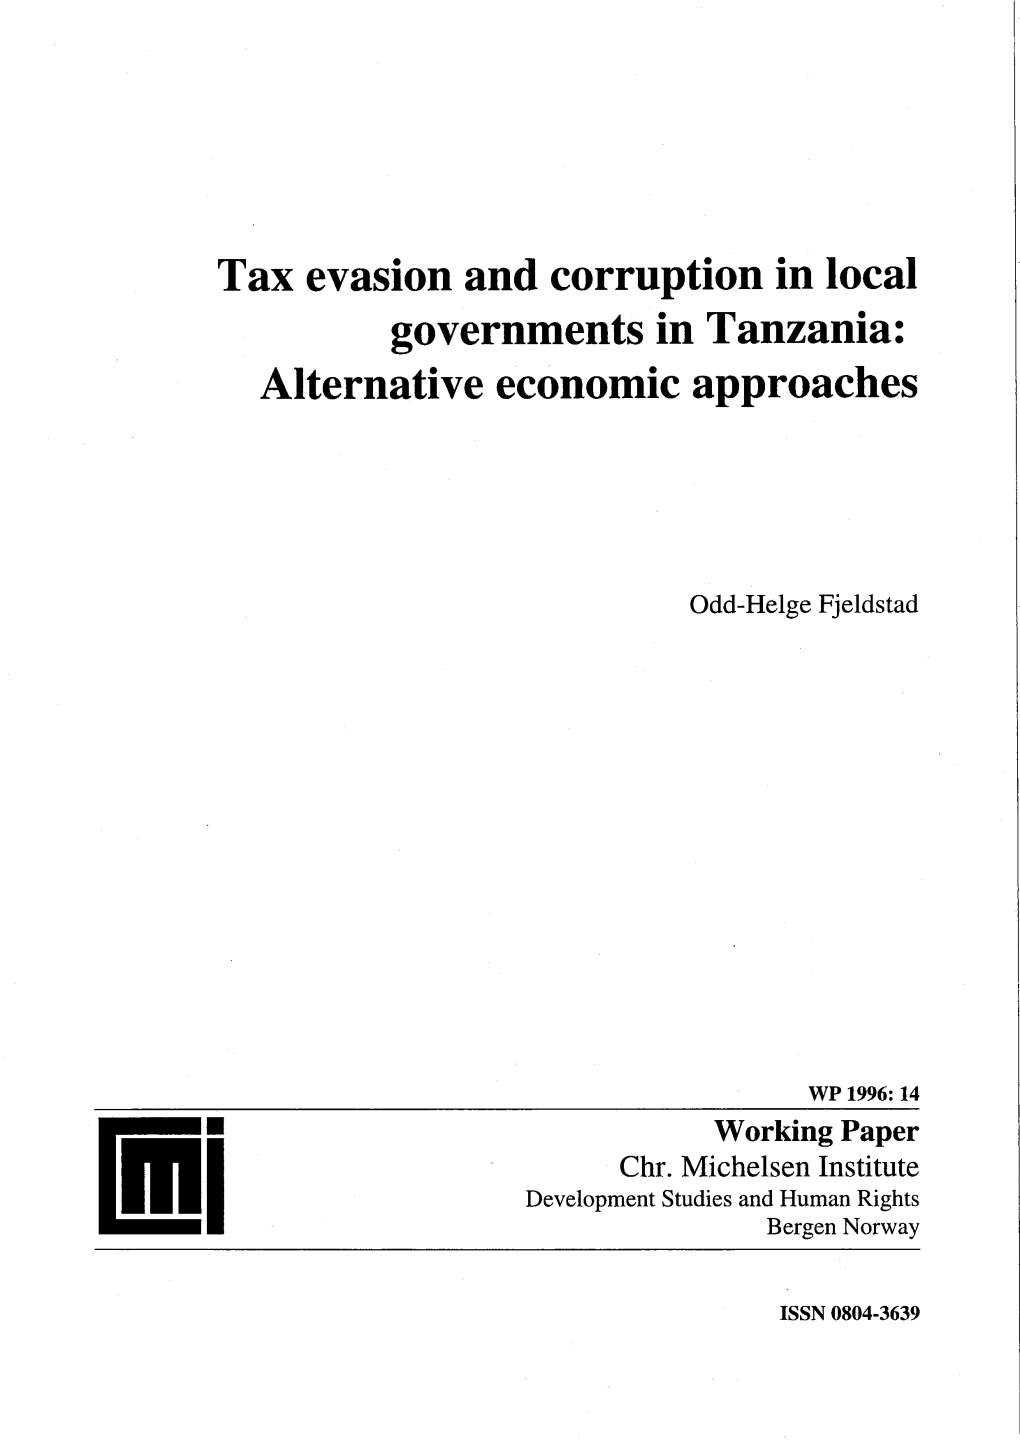 Tax Evasion and Corruption in Local Governments in Tanzania: Alternative Economic Approaches